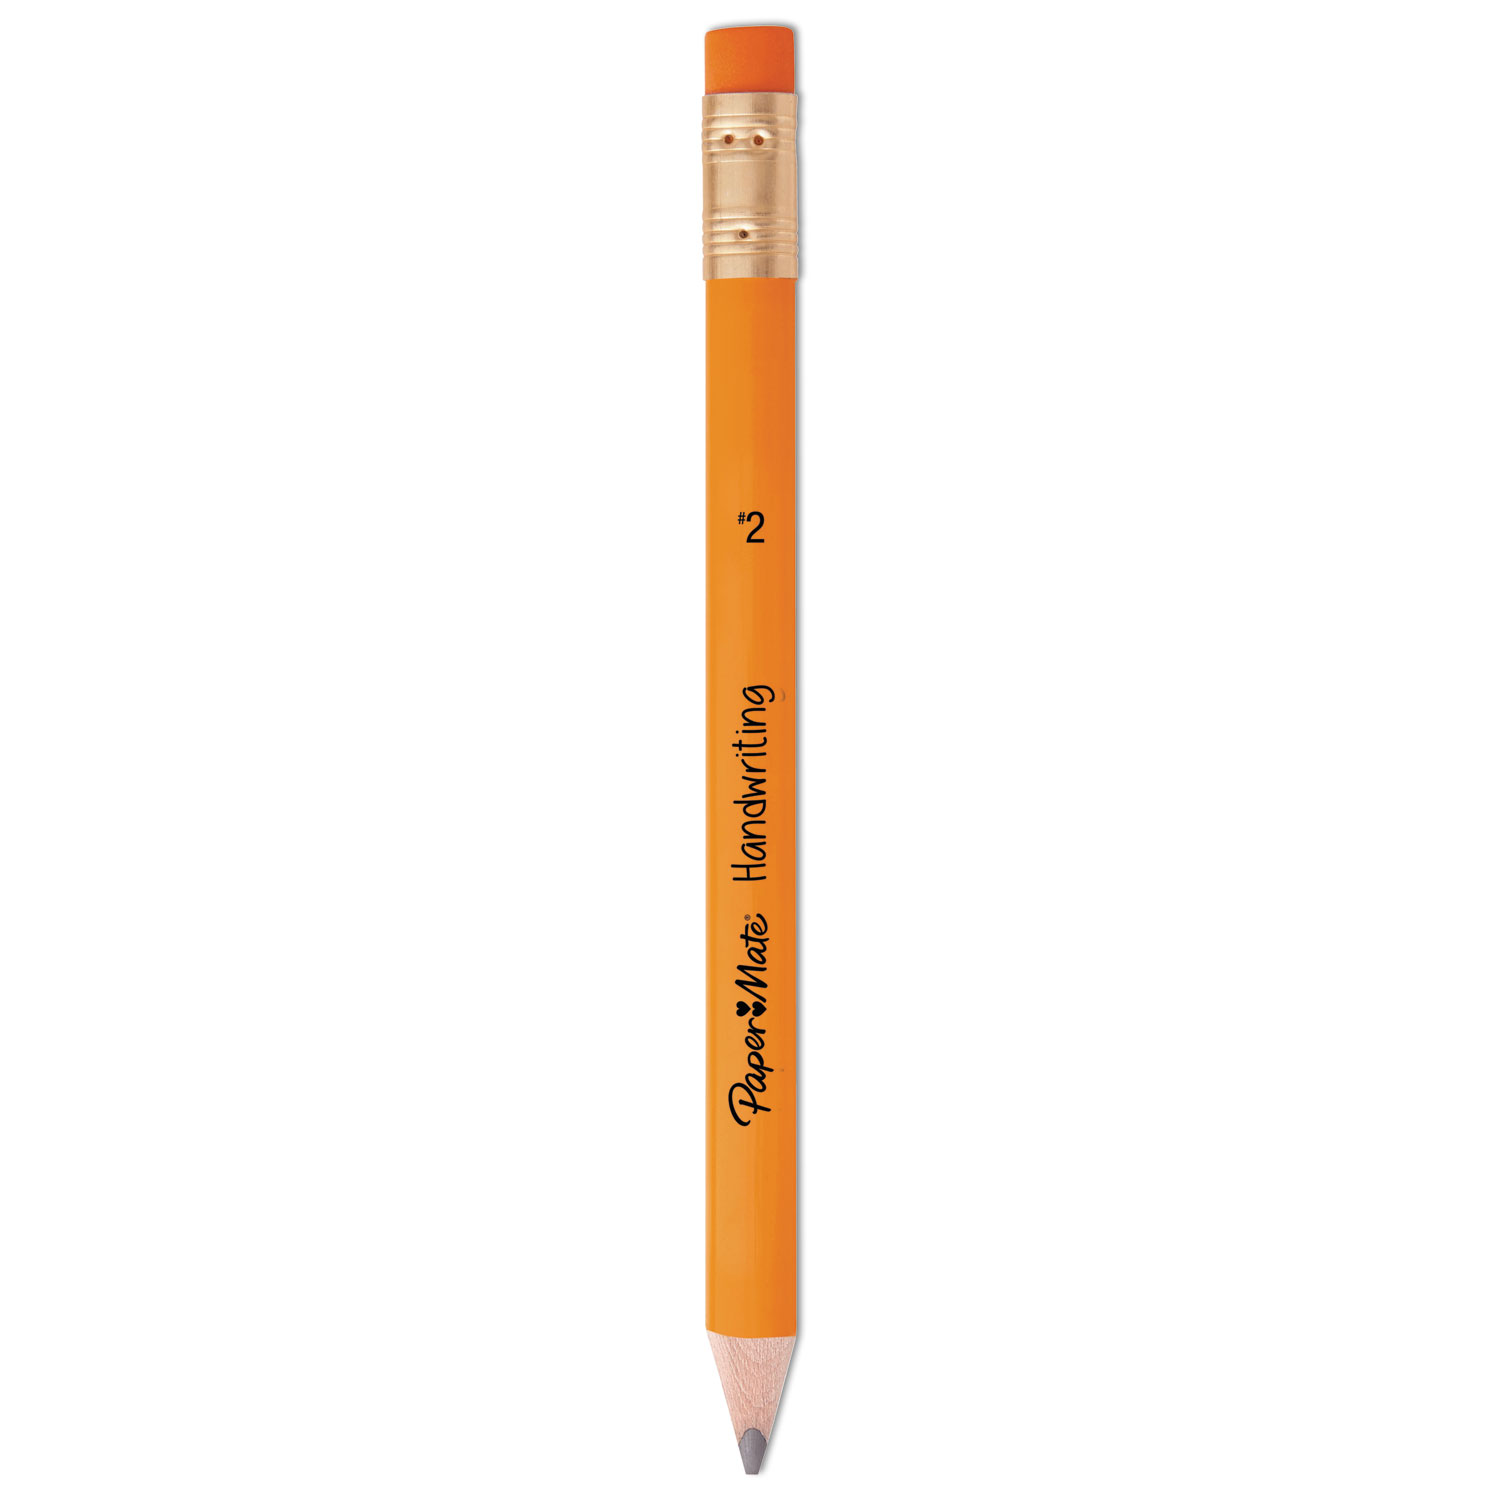 Handwriting Woodcase Pencils, HB, #2, Orange Barrel, 12/Pack